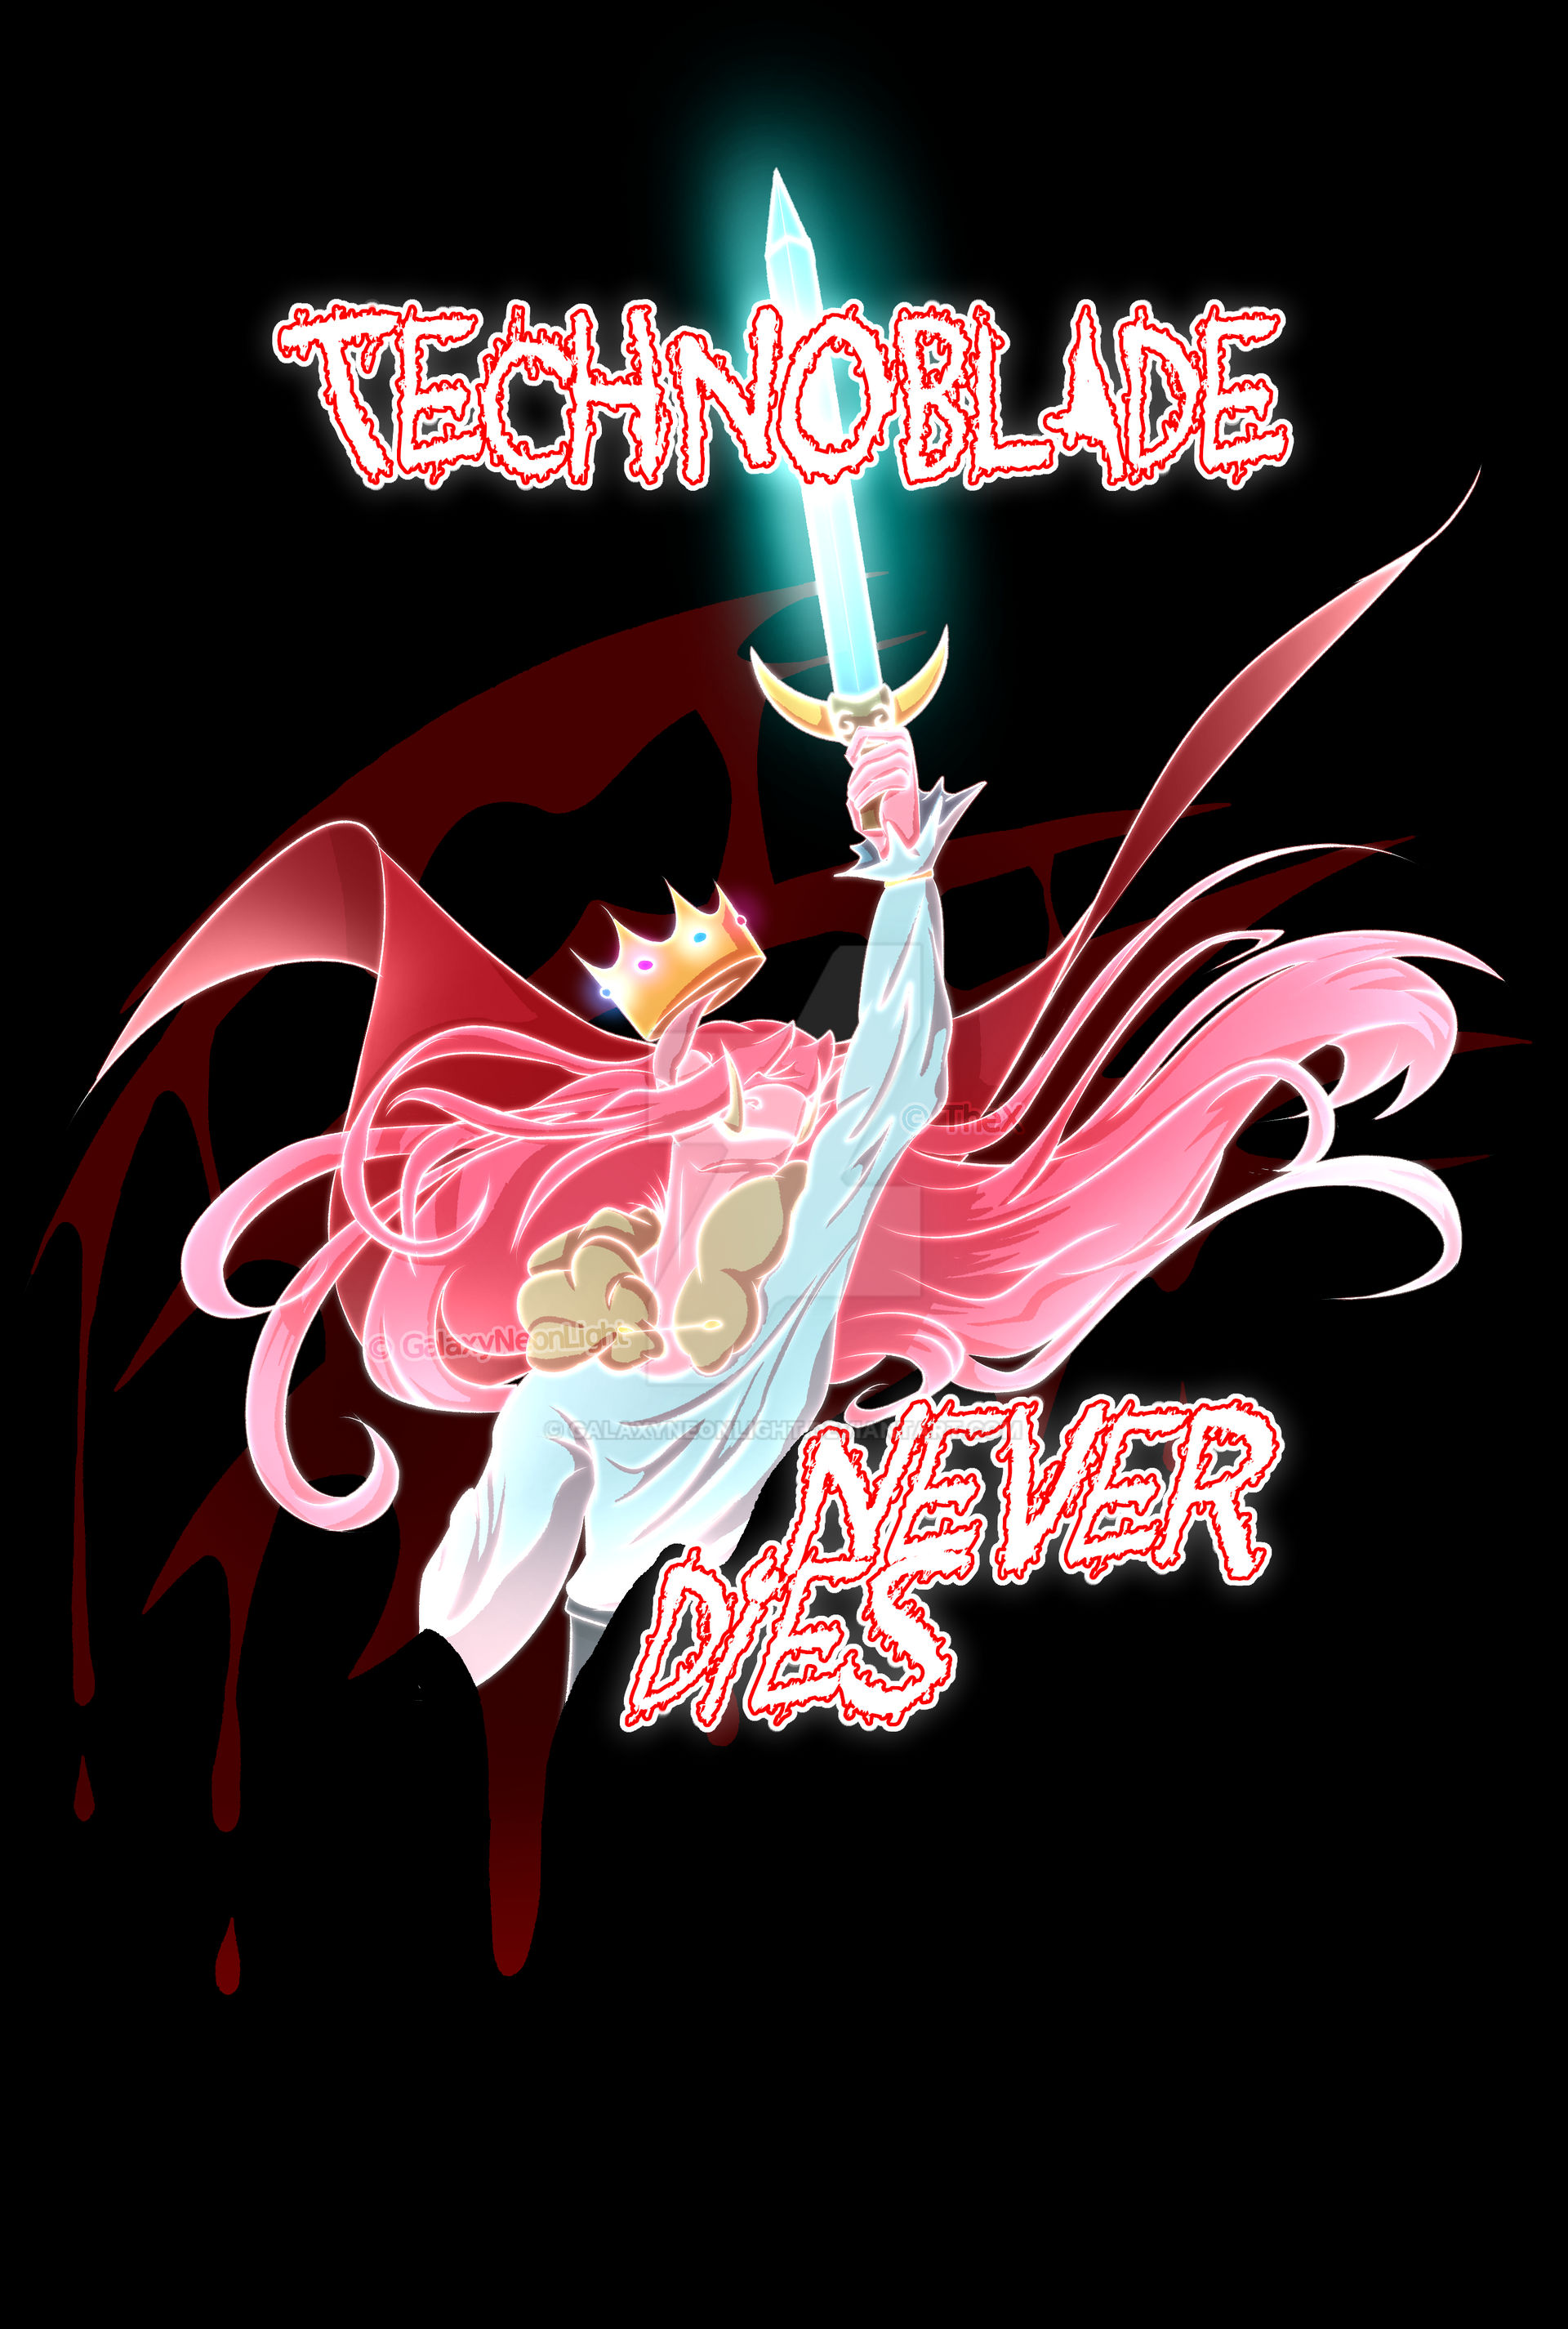 technoblade never dies : r/Tecnoblade